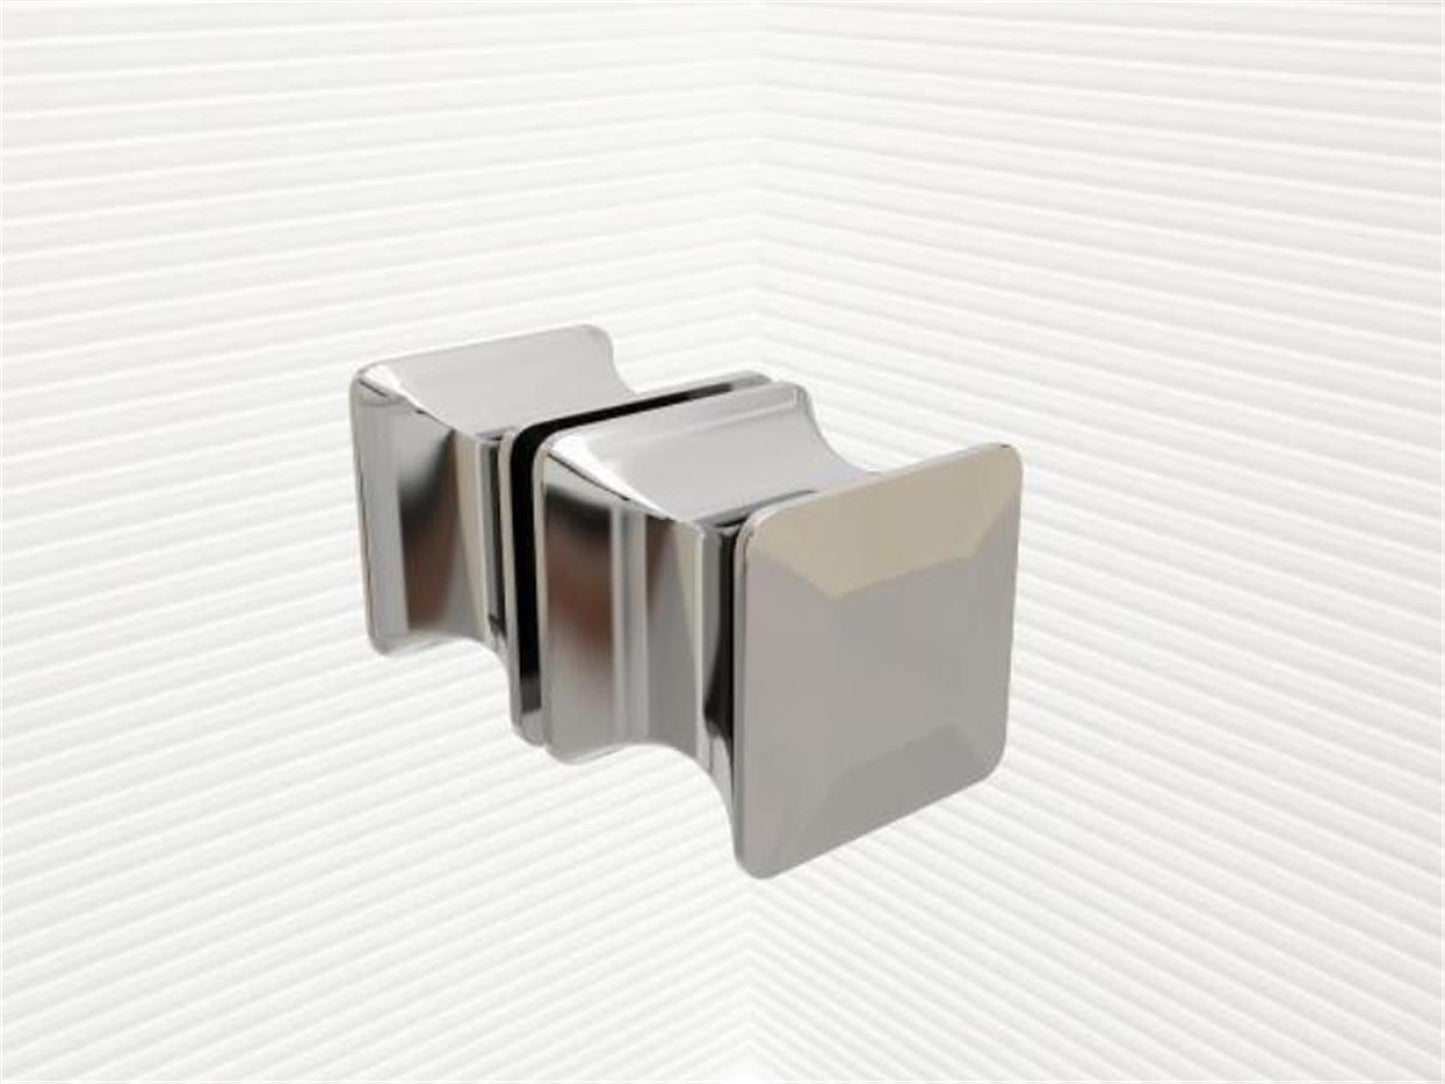 GlasHomeCenter - Cabina de ducha en forma de U "Asuka" (100x75x180cm) - 8mm - cabina de ducha de esquina - mampara de ducha - sin plato de ducha